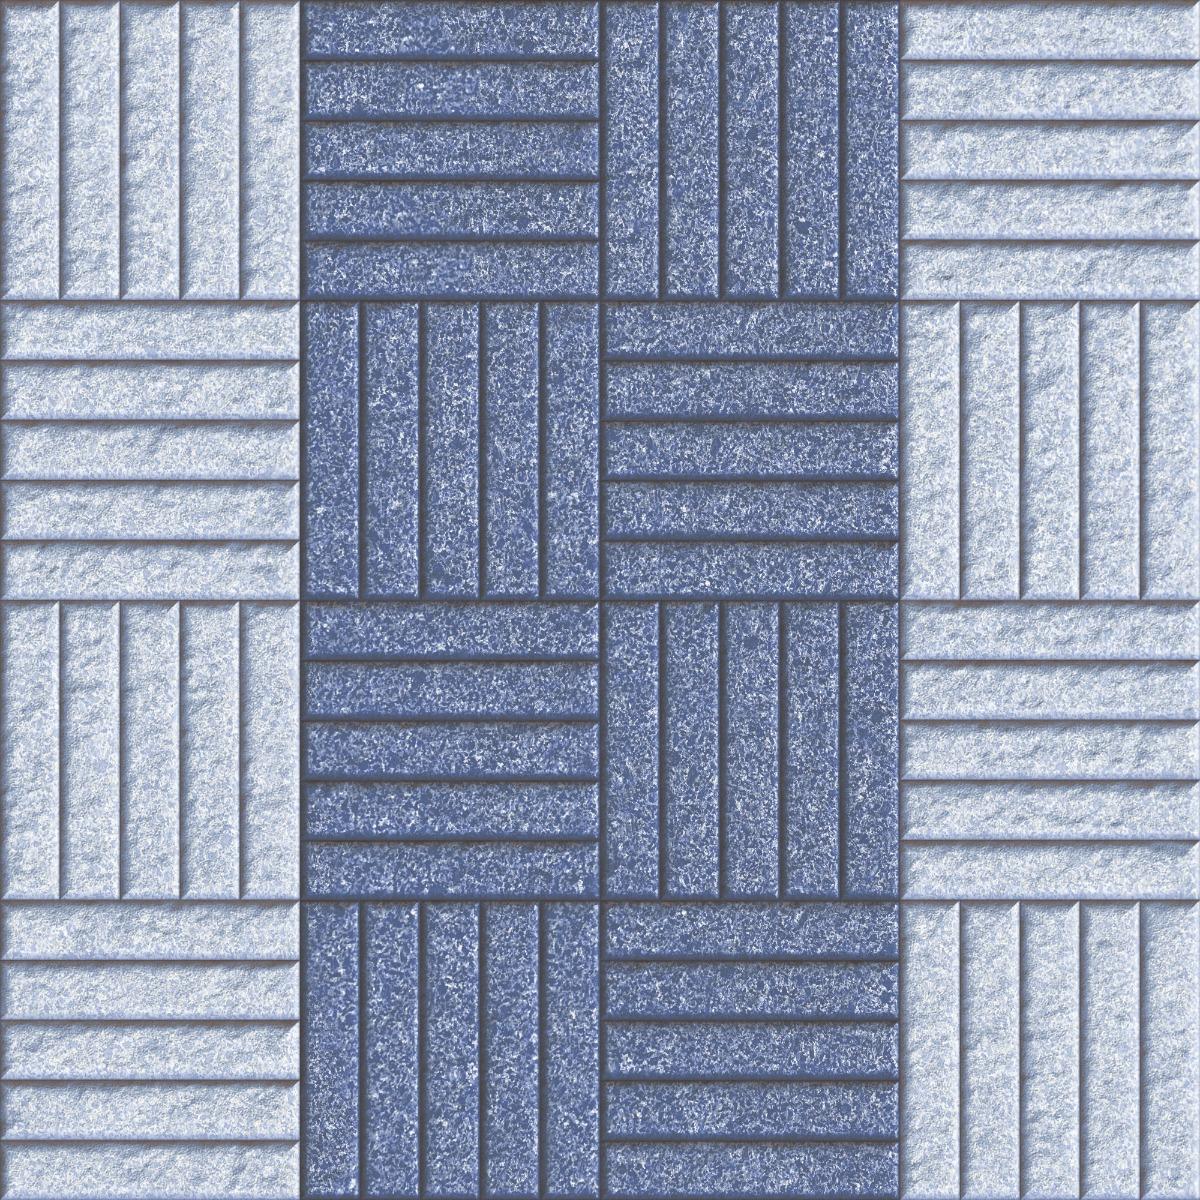 Pathway Tiles for Commercial Tiles, Parking Tiles, Office Tiles, Pathway Tiles, Hospital Tiles, High Traffic Tiles, Bar/Restaurant, Outdoor Area, Porch/Parking